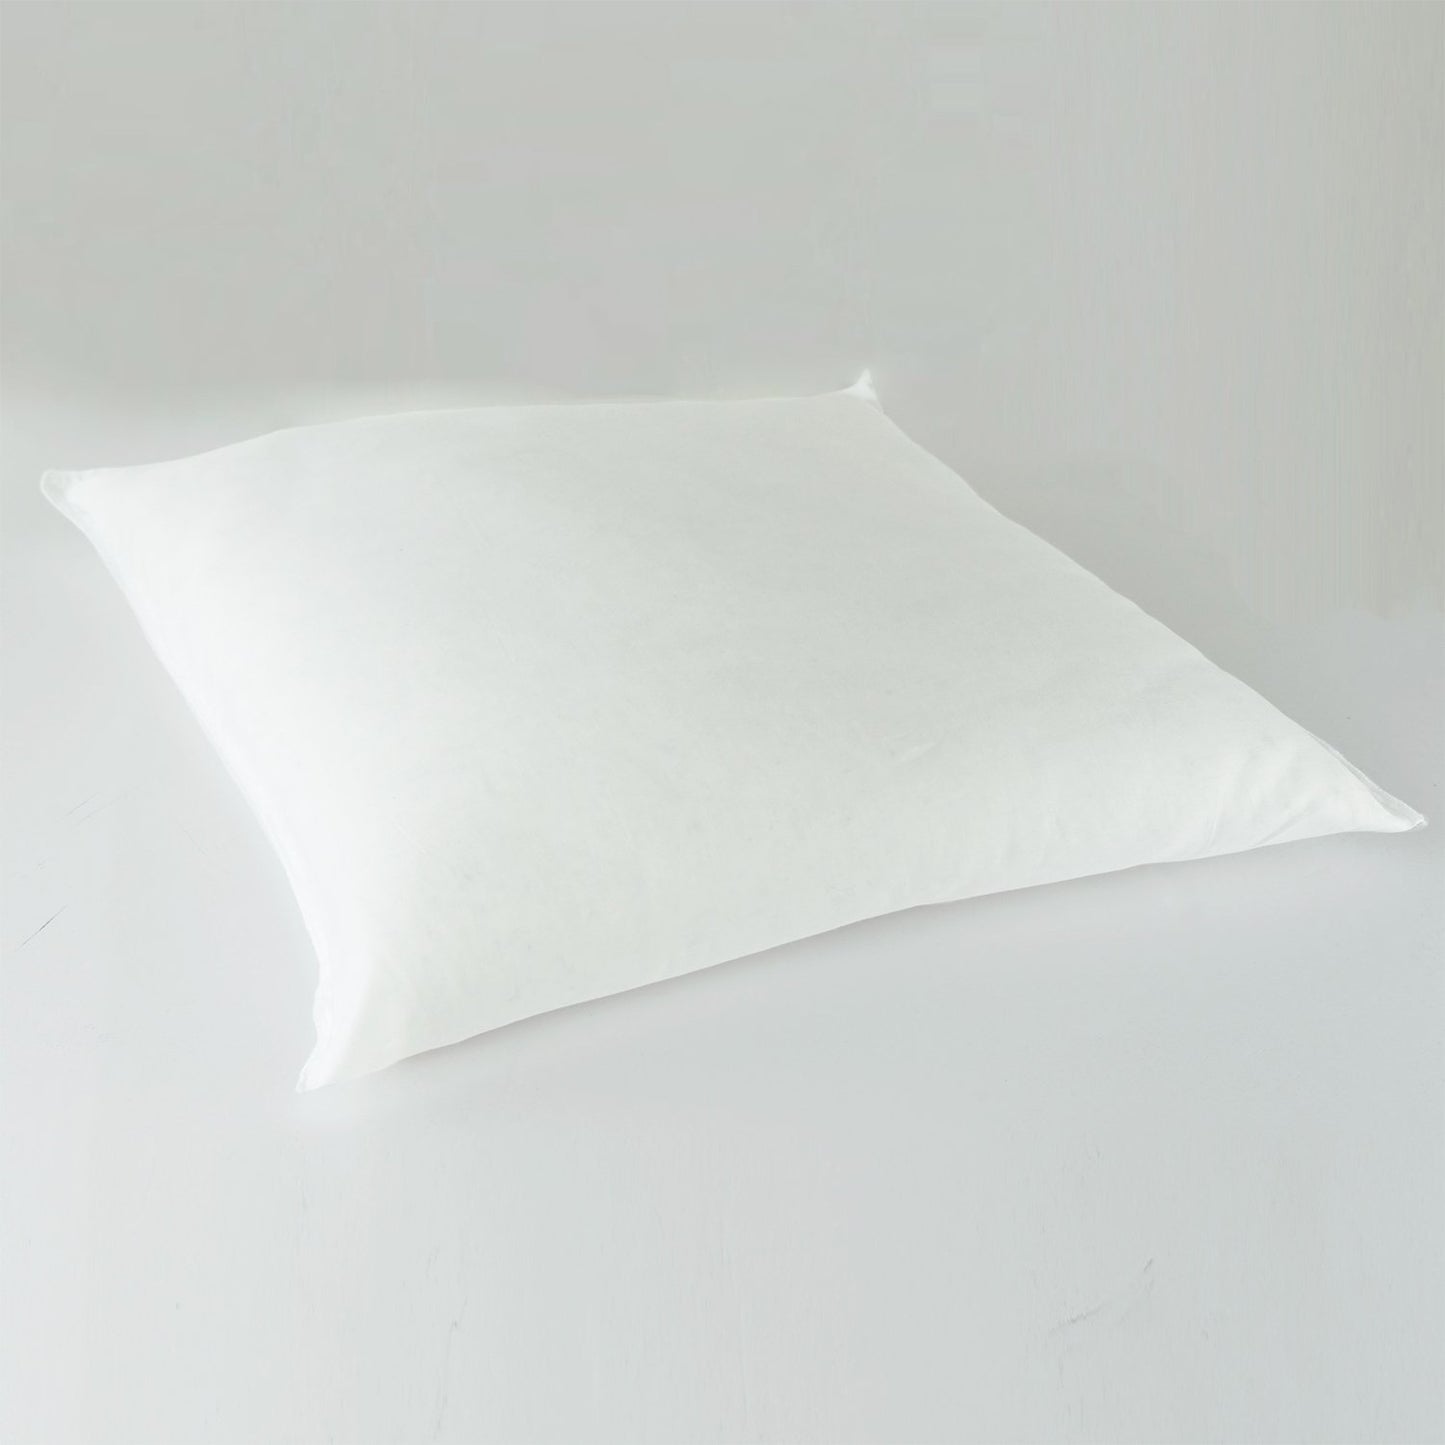 J-Life Cherry Blossom Blue Zabuton Floor Pillow_Pillows & Shams_Zabuton Floor Pillows_100% Cotton_Reversible_Handmade